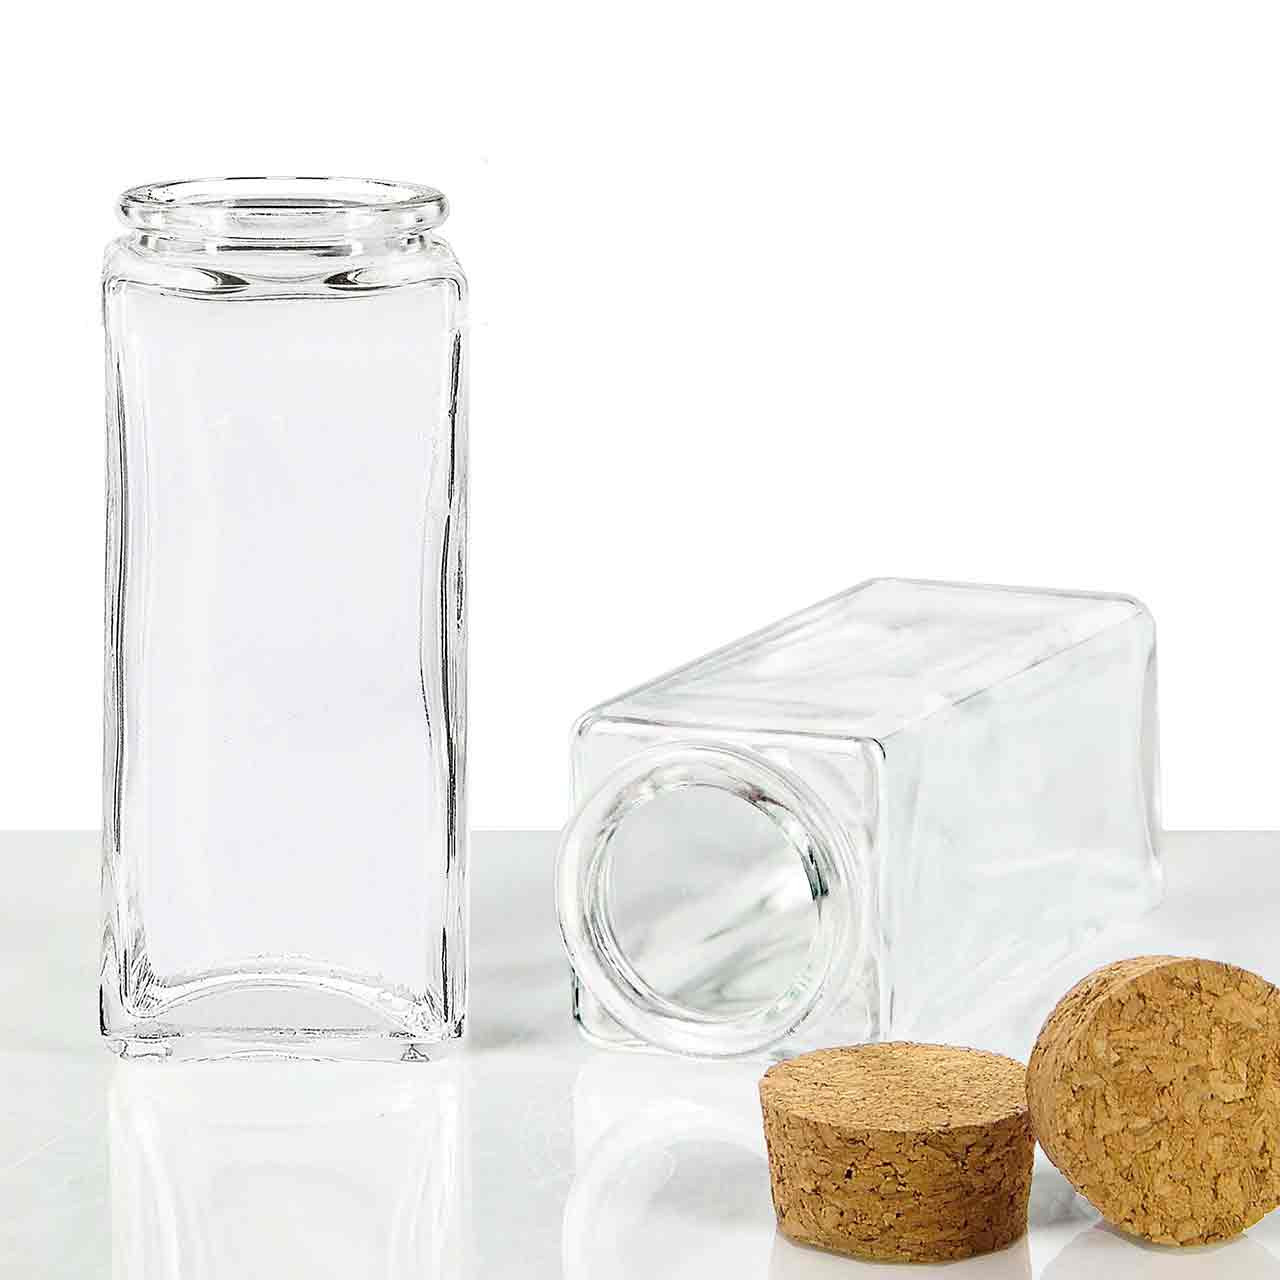 The Container Store 3 oz. Glass Spice Jar Gold Pkg/12, 1-3/4 diam. x 3-3/4 H